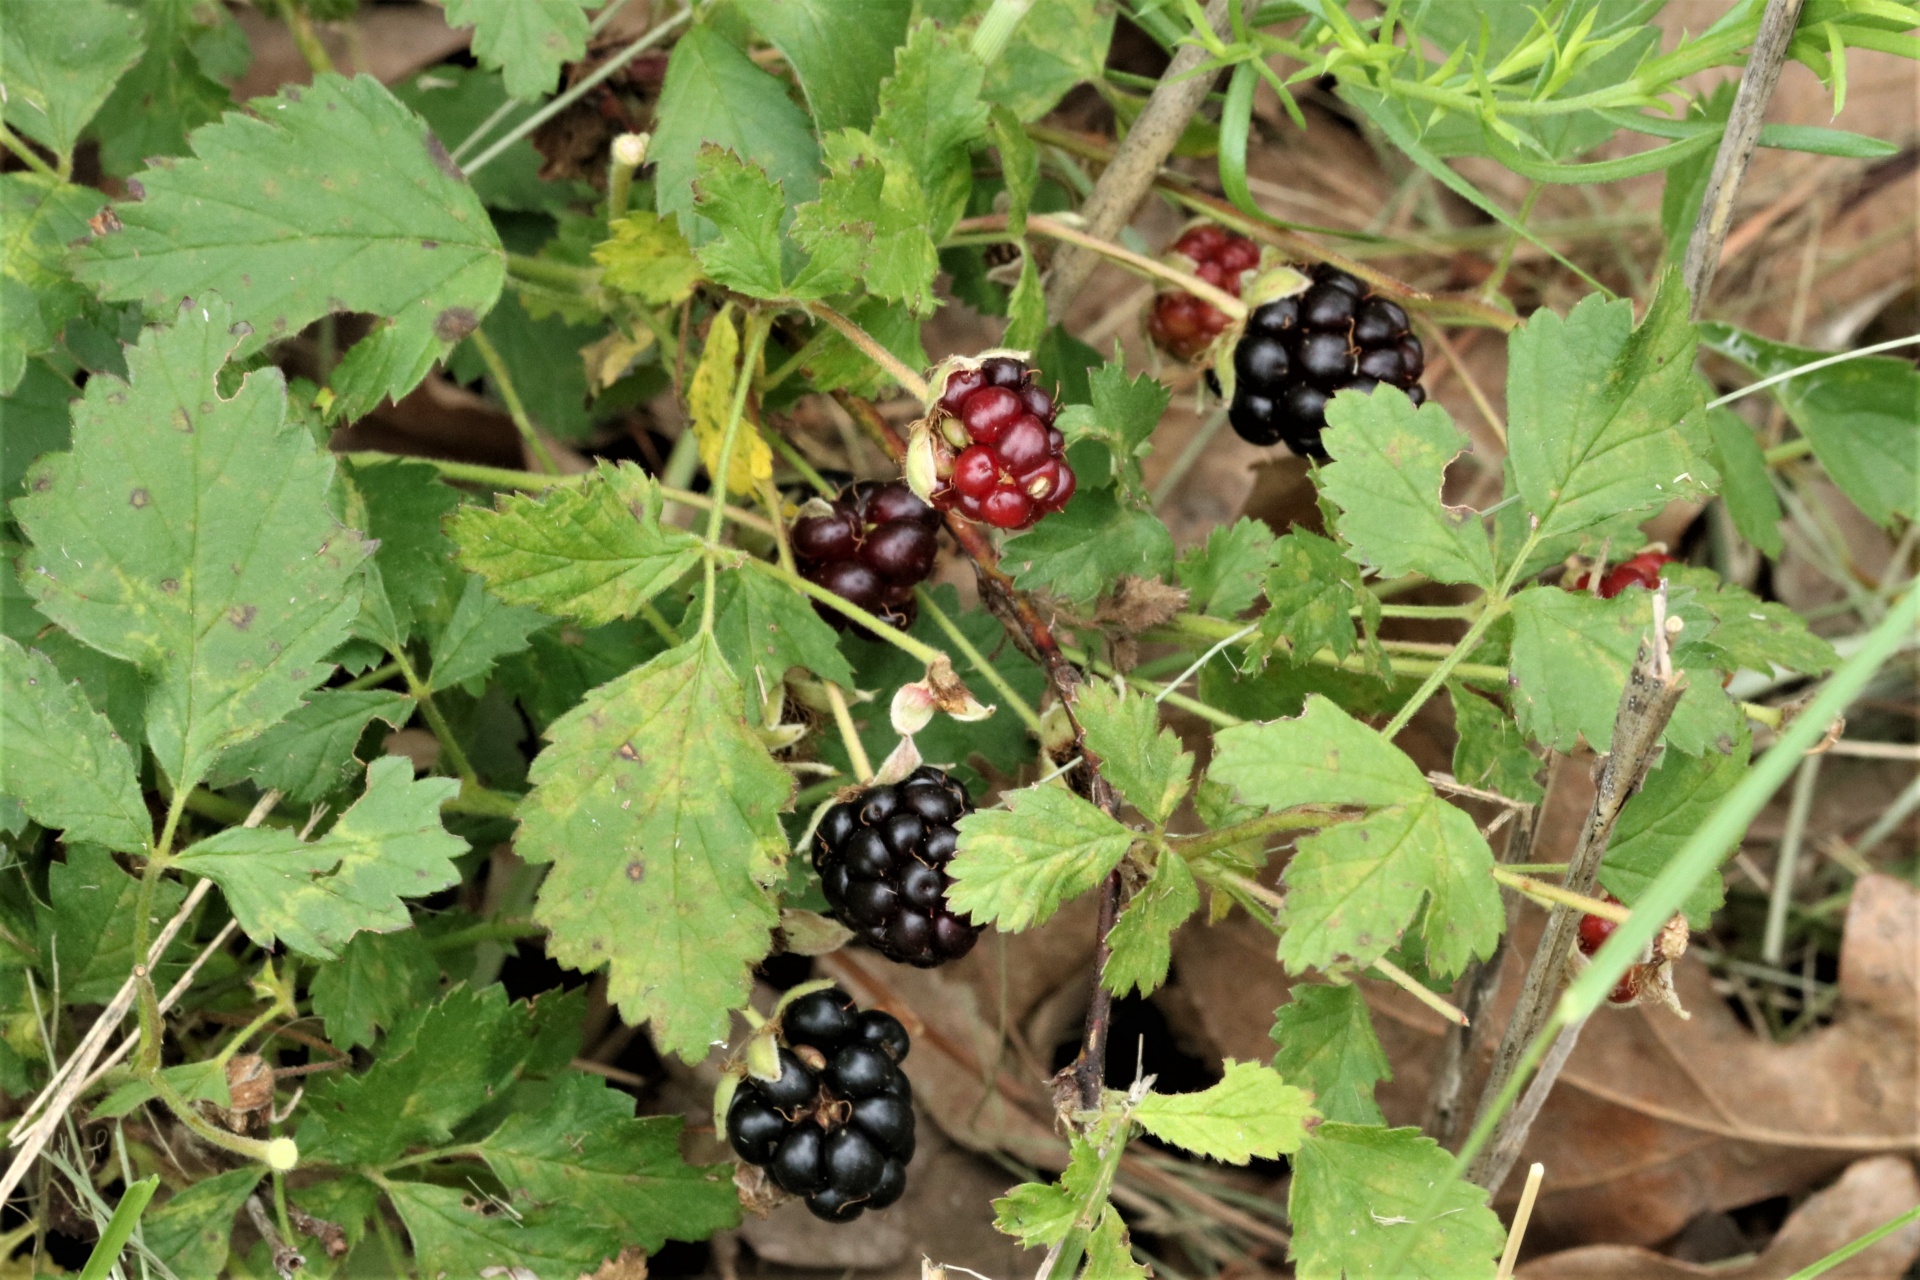 Close-up of wild blackberries on the vine.